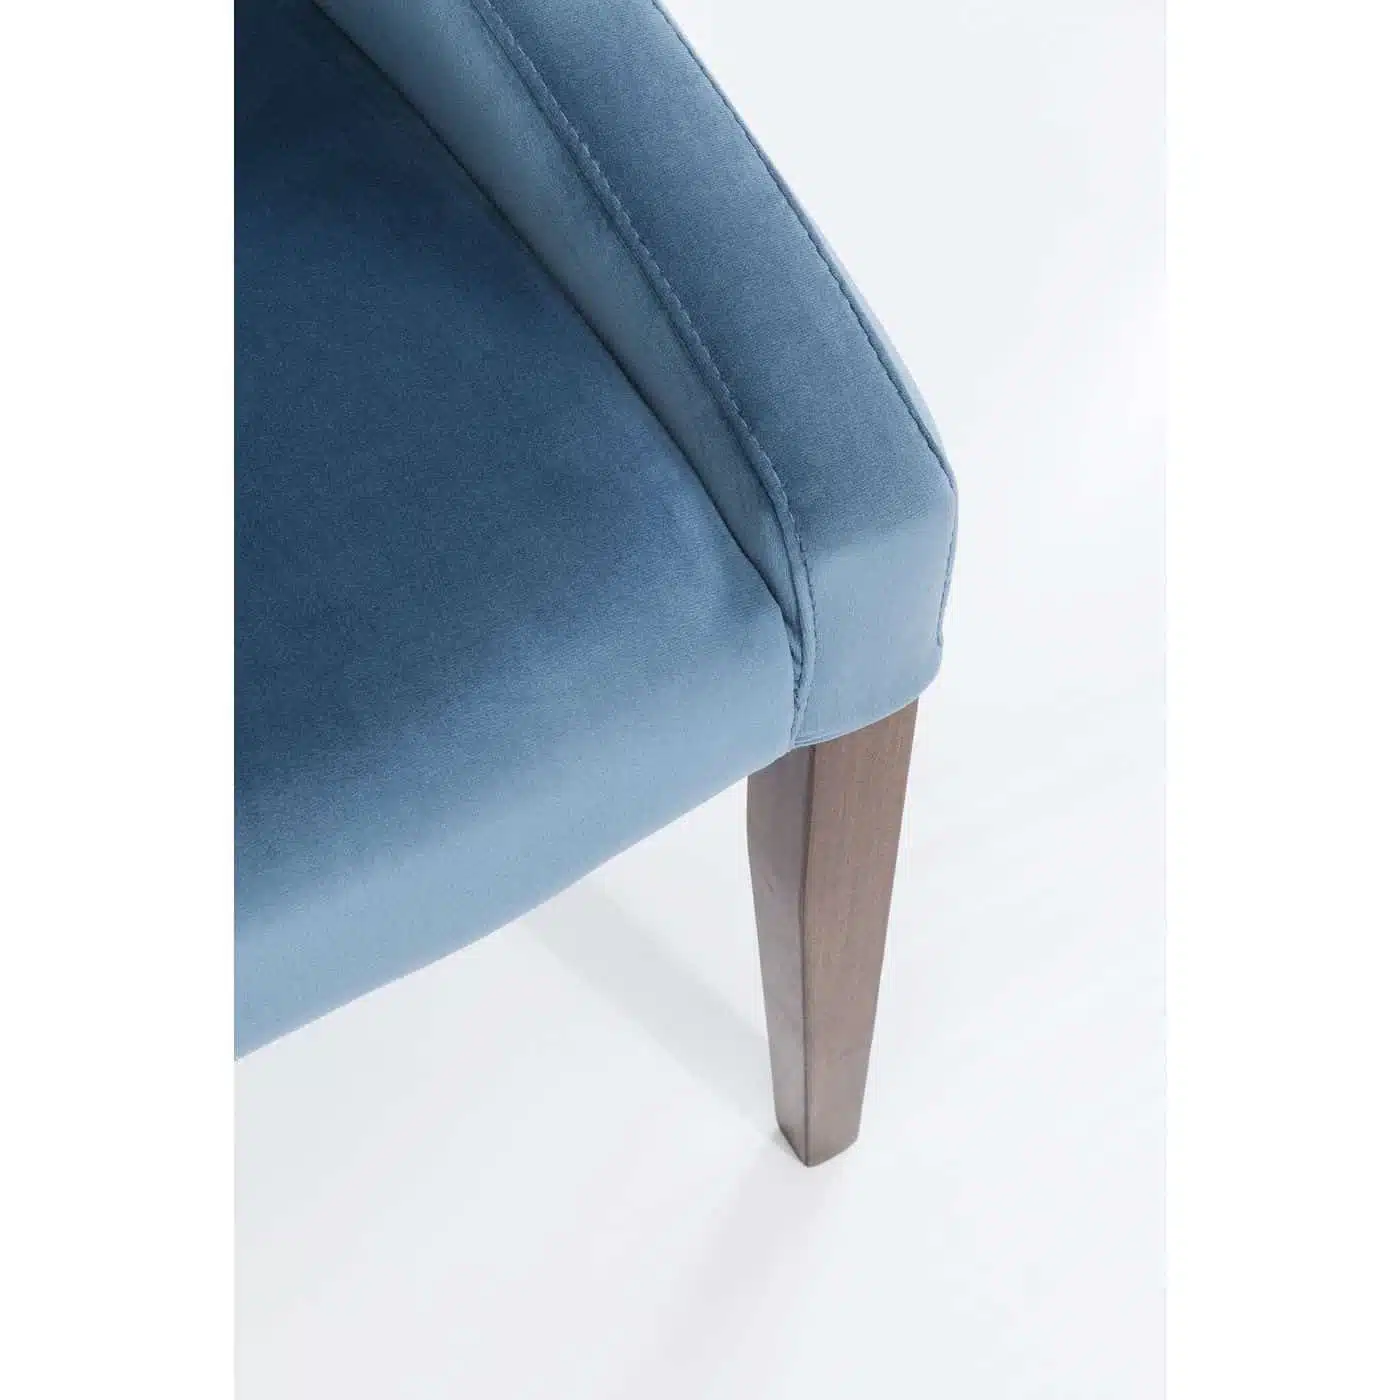 Chaise Mode velours bleu pétrole Kare Design